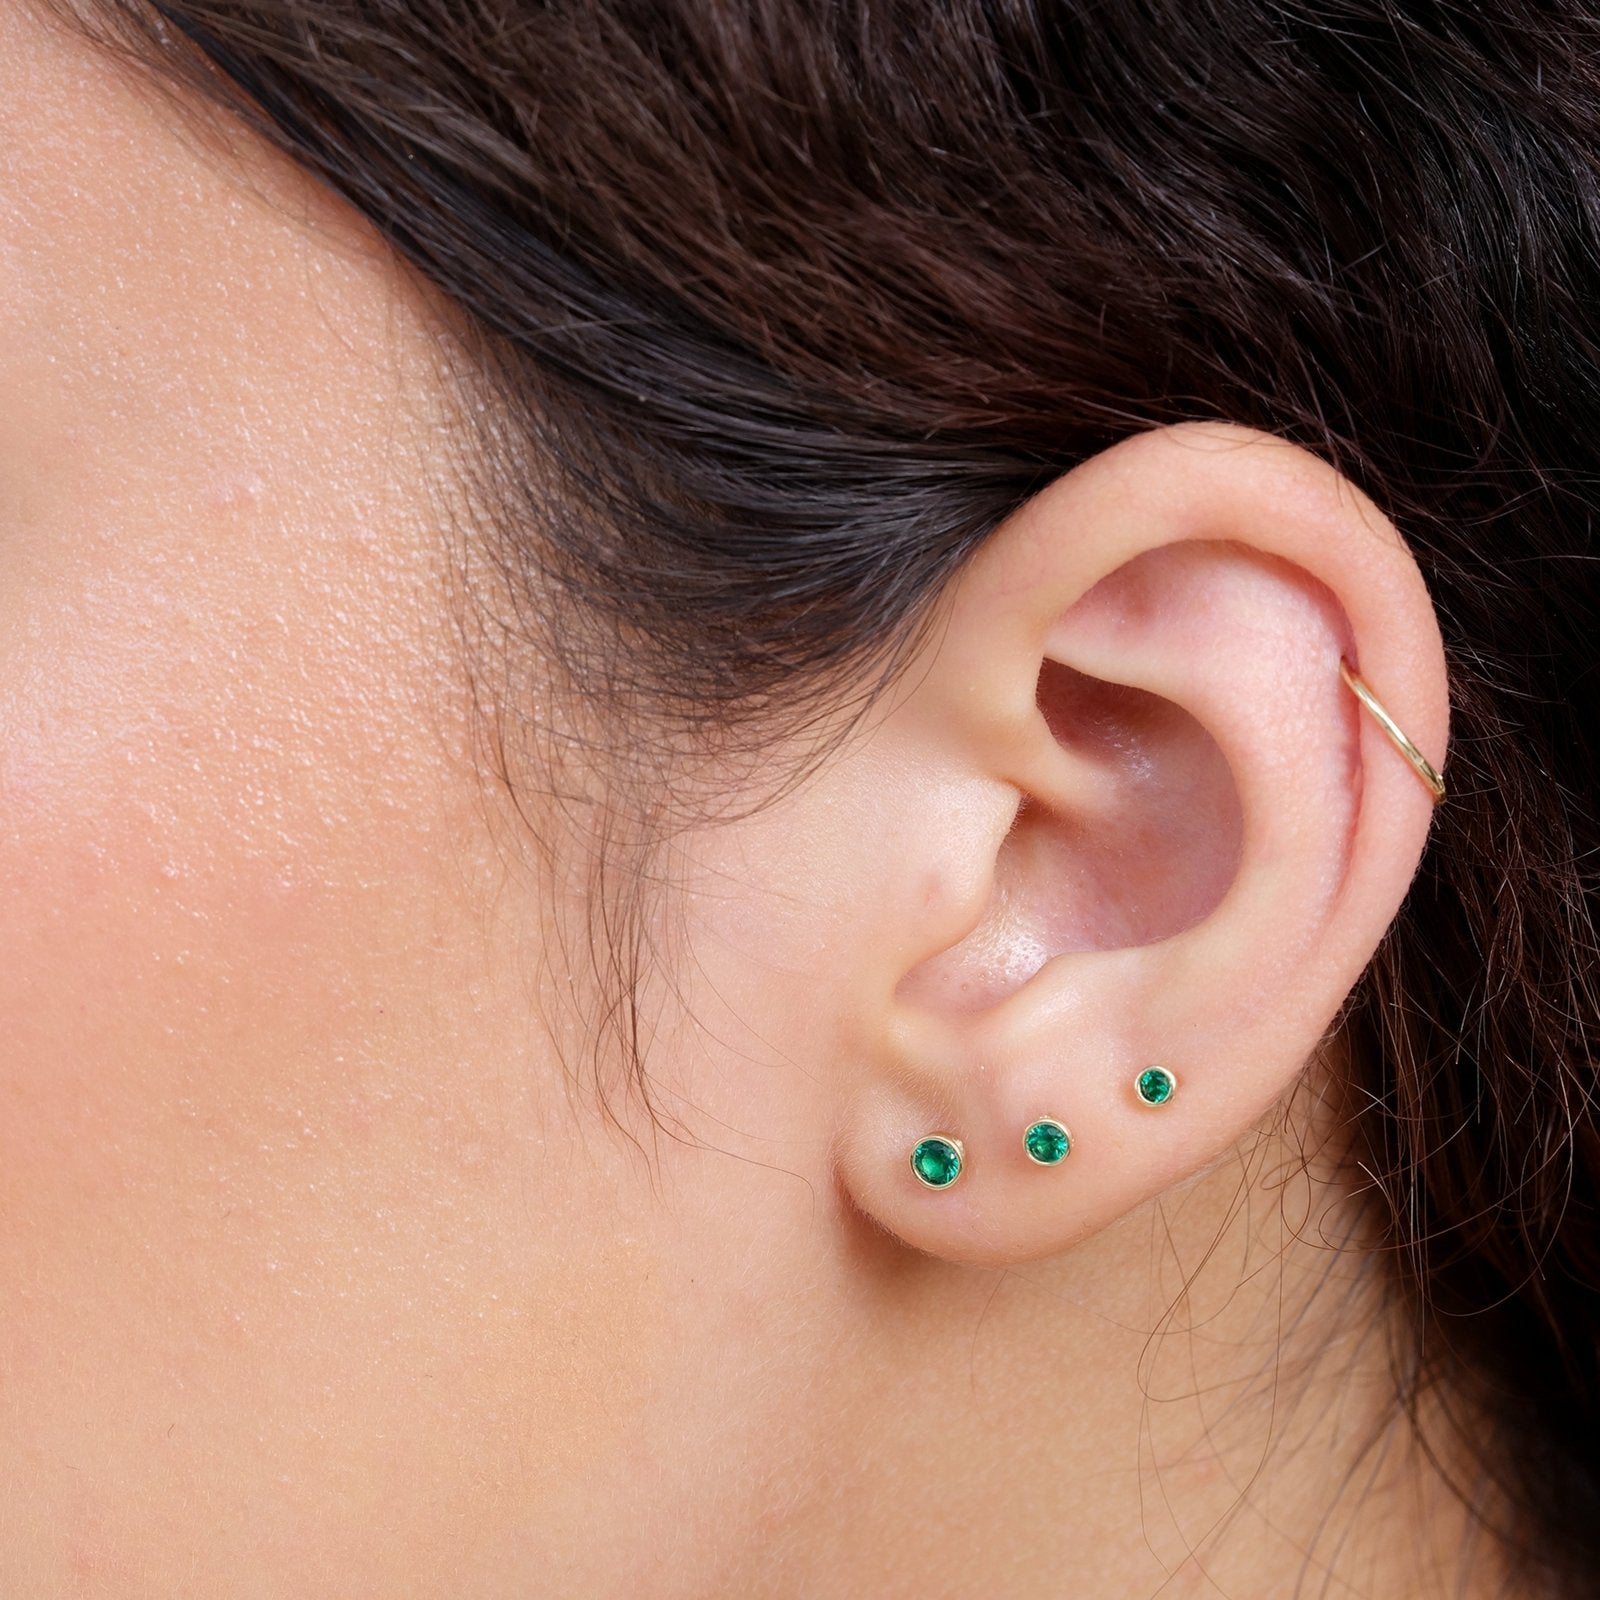 Emerald Milgrain Bezel Flat Back Stud Earrings Estella Collection #product_description# 18107 14k Birthstone Birthstone Earrings #tag4# #tag5# #tag6# #tag7# #tag8# #tag9# #tag10# 2.5MM 5MM